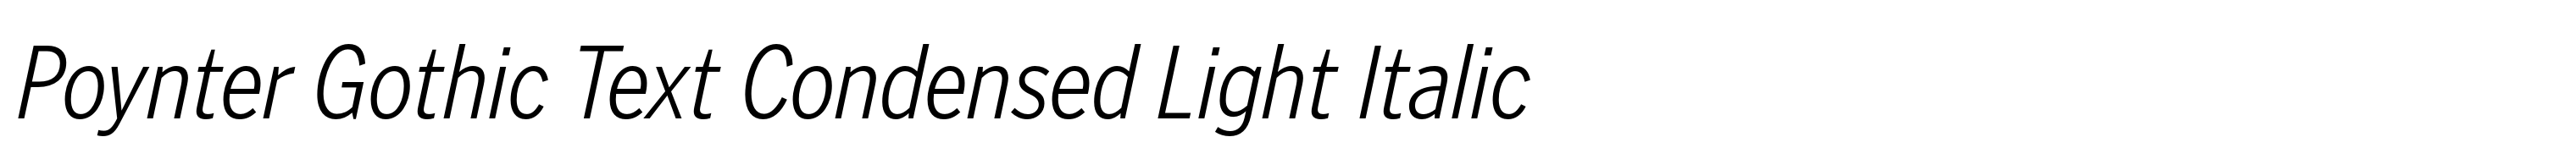 Poynter Gothic Text Condensed Light Italic